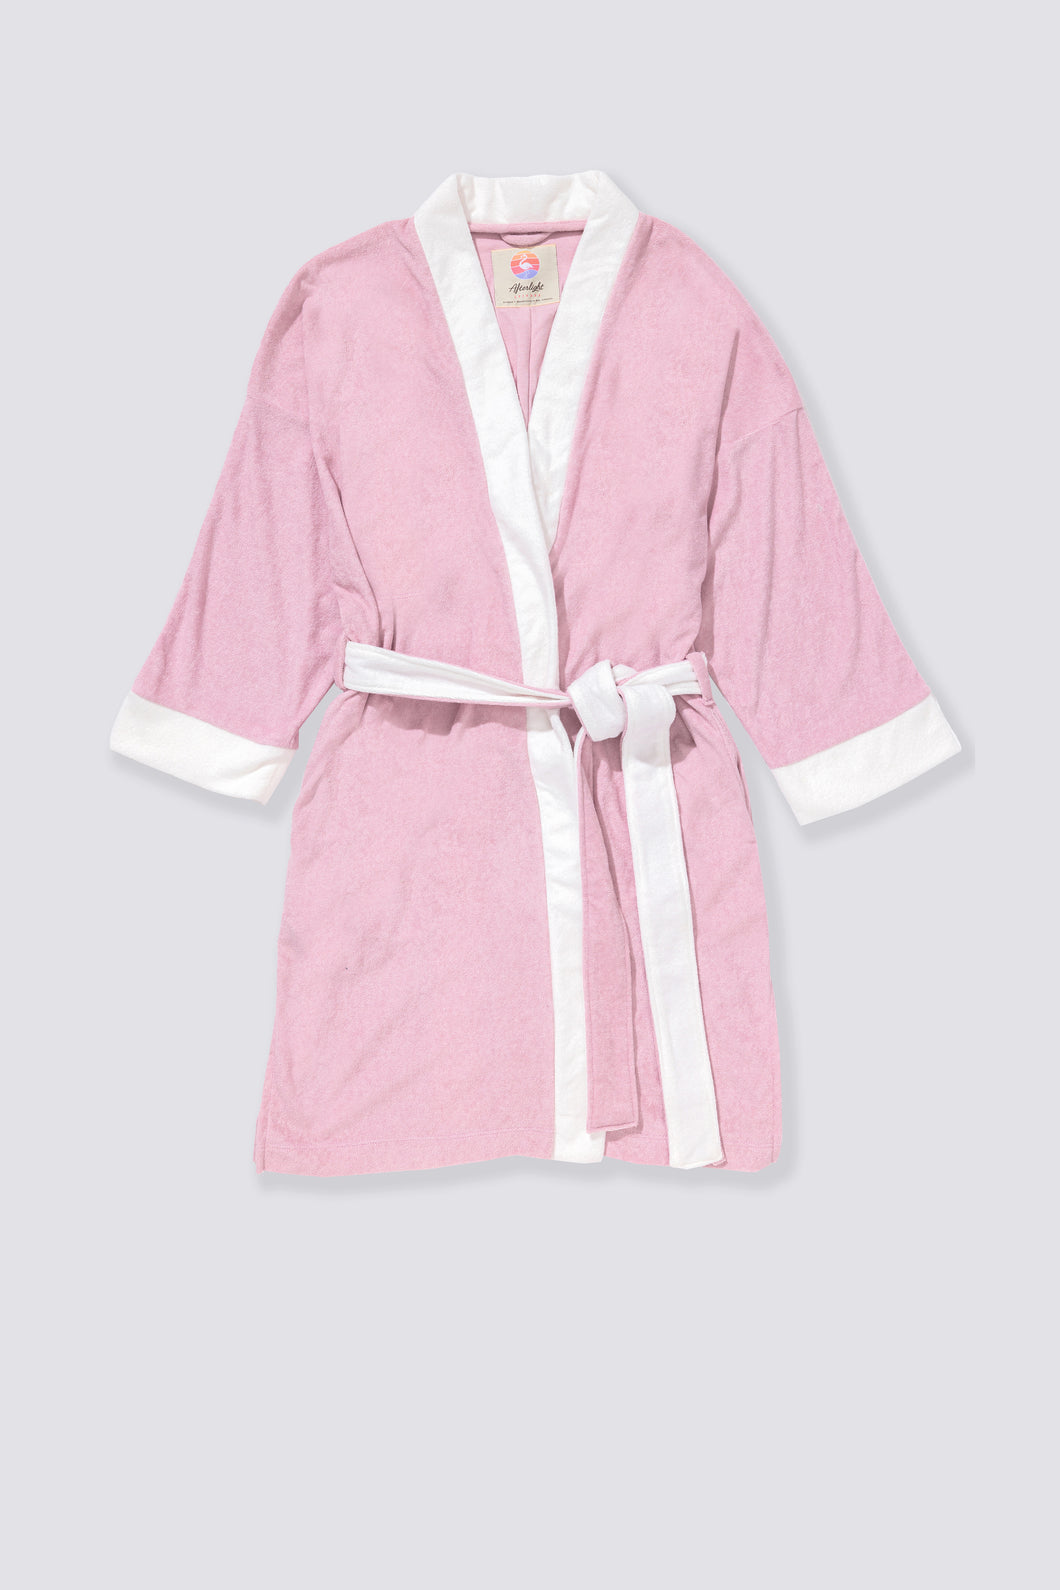 Terry Cloth Kimono - Palm Springs Pink